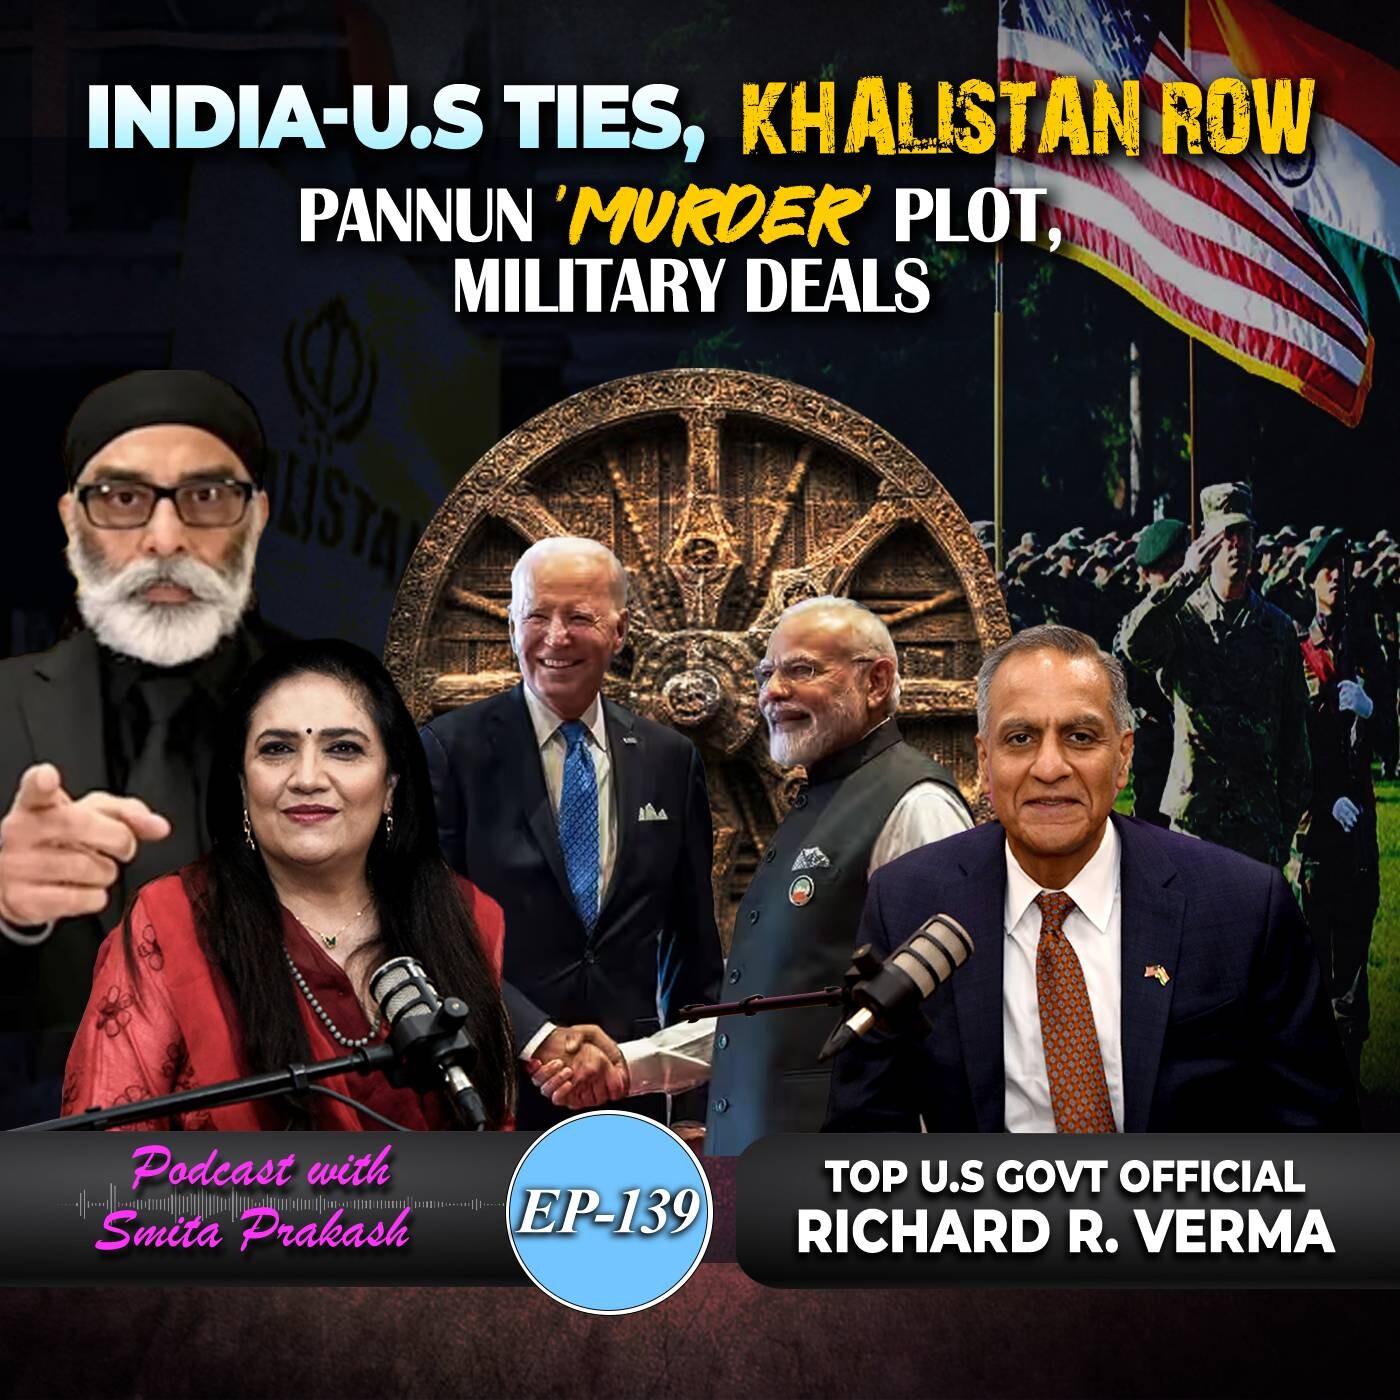 EP 139 - India-U.S Ties, Khalistan Row, Pannun 'Plot' with Top U.S Official Richard R. Verma